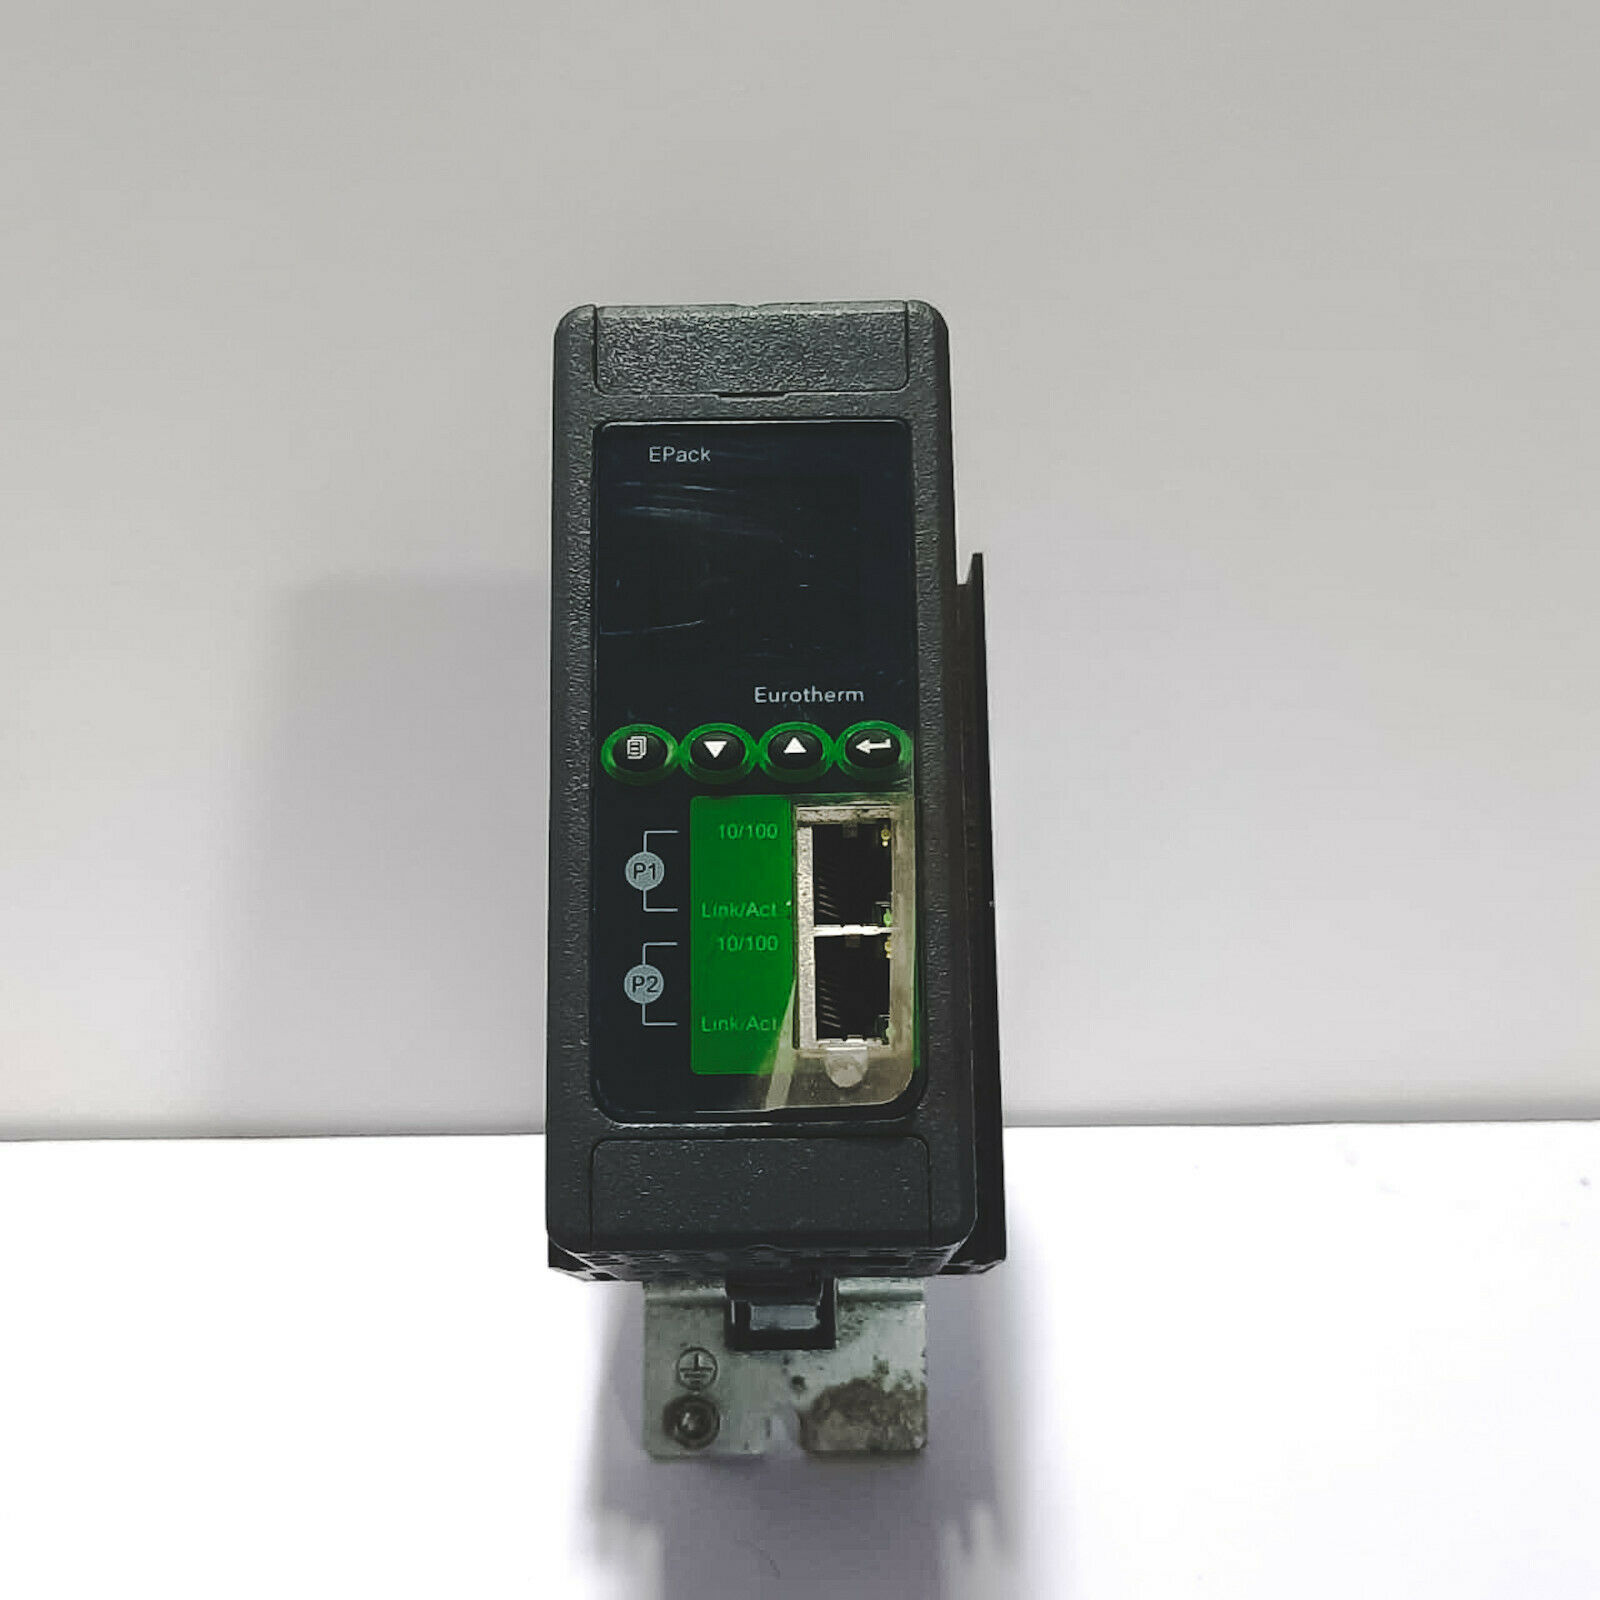 EUROTHERM EPACK-1PH/63A/500V/V2CL/XXX/EMS/TCP COMPACT SCR POWER CONTROLLER